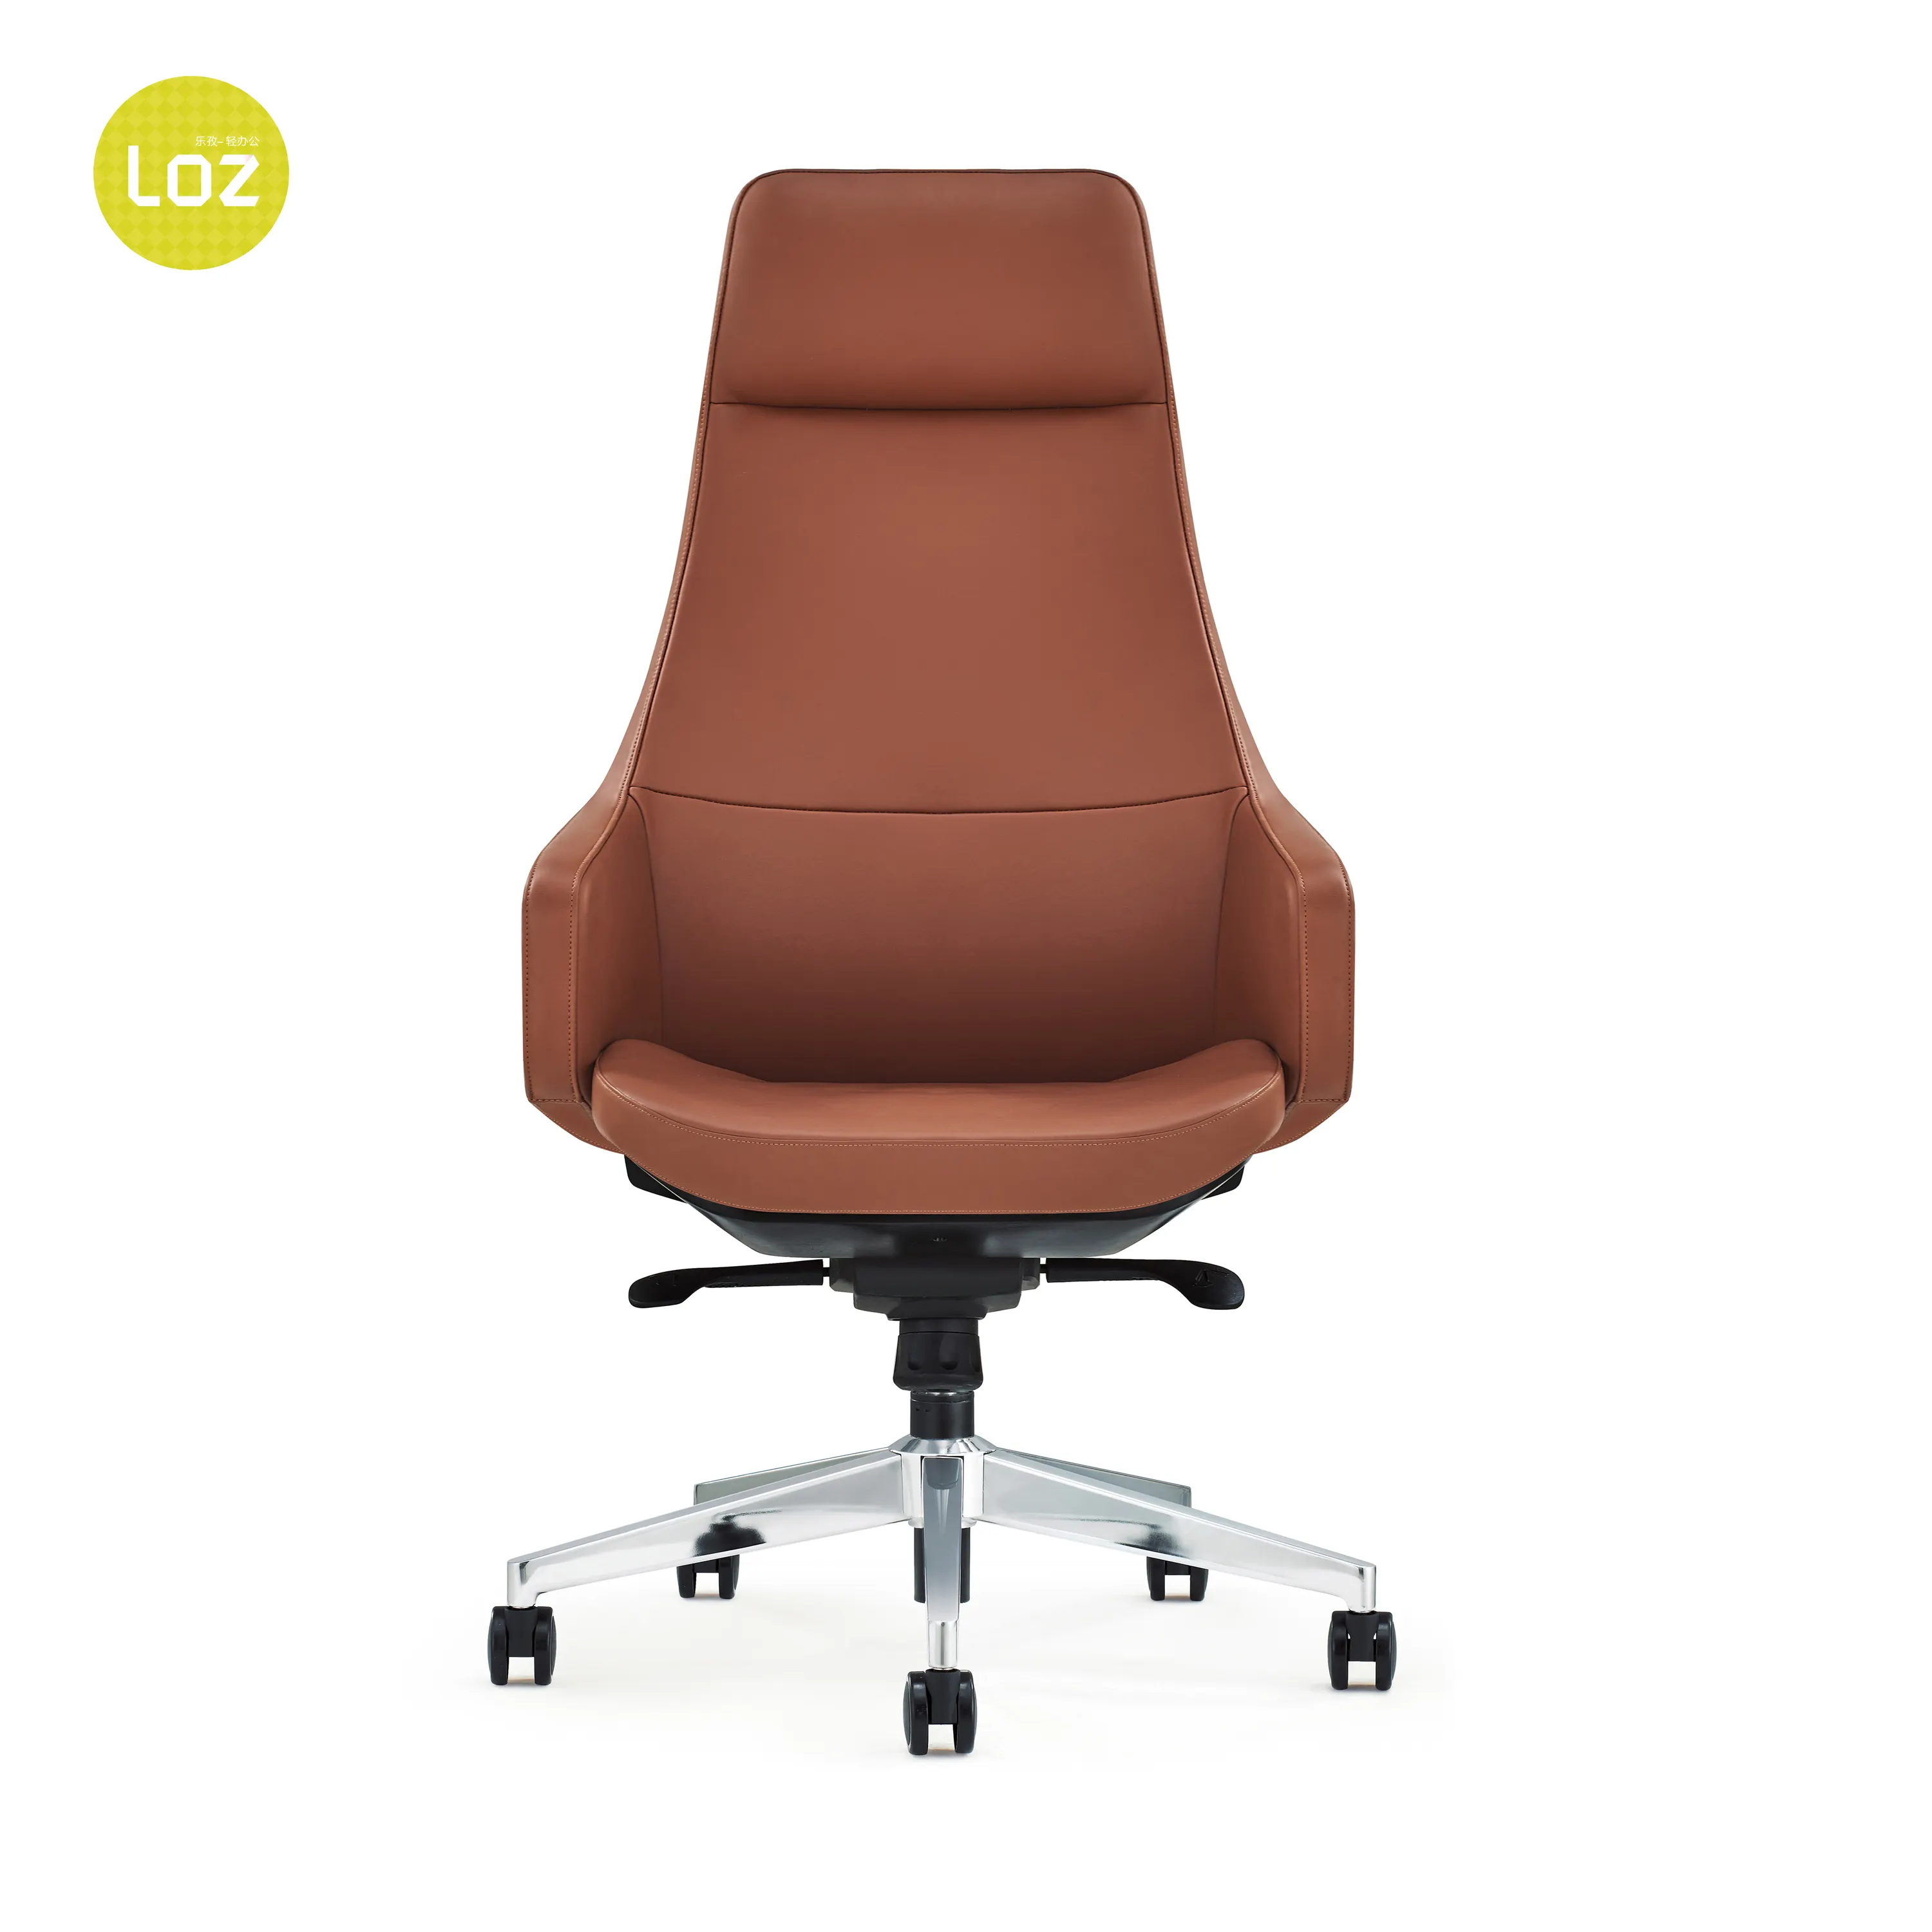 Morden design office home furniture tech leather aluminum wheel high back office ergonomic chair with headrest